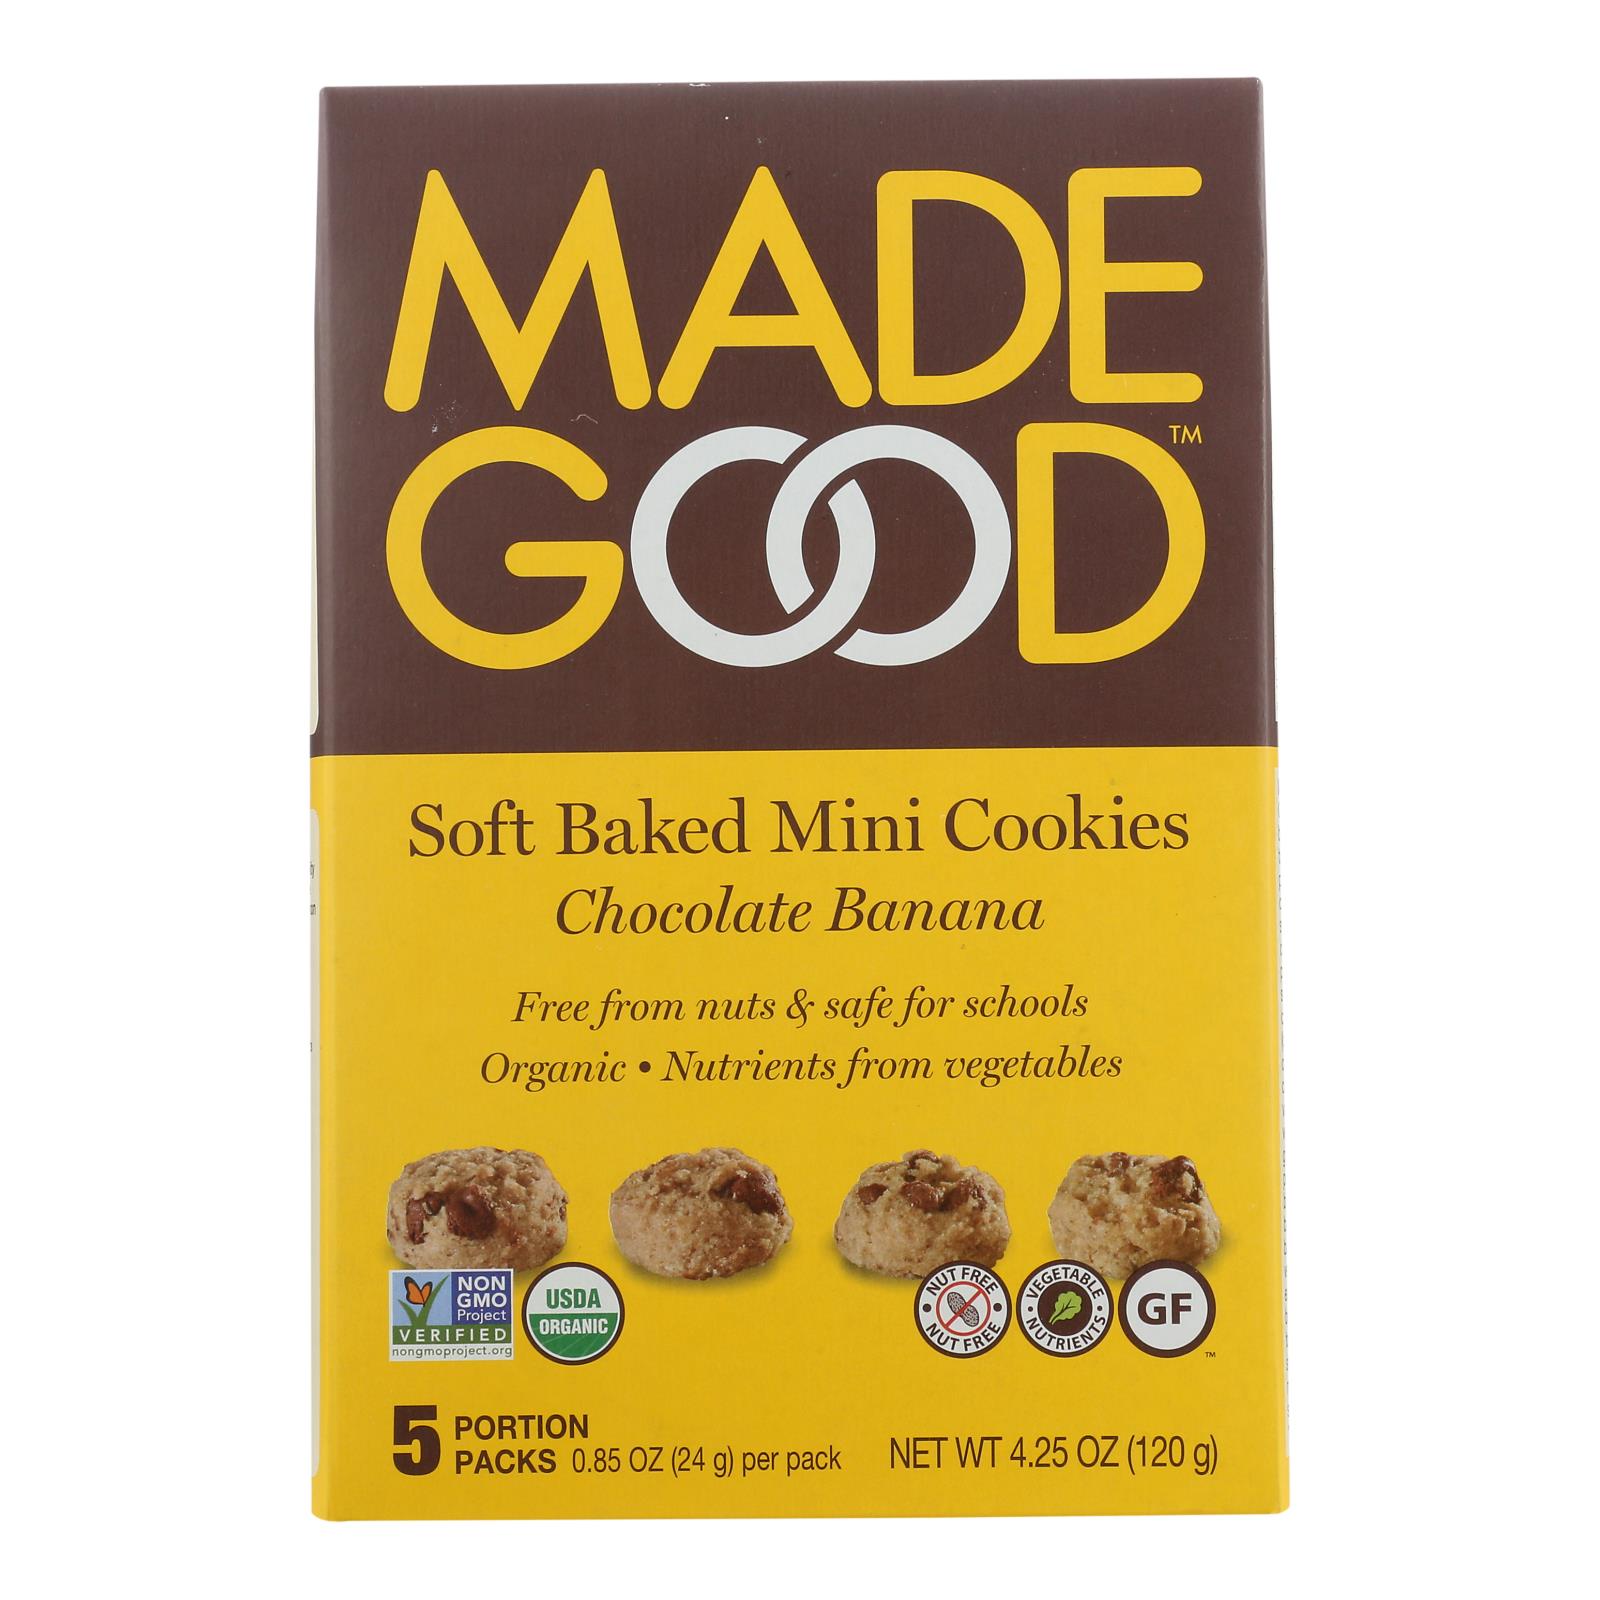 Made Good Soft Baked Mini Cookies Chocolate Banana - 6개 묶음상품 - 4.25 OZ